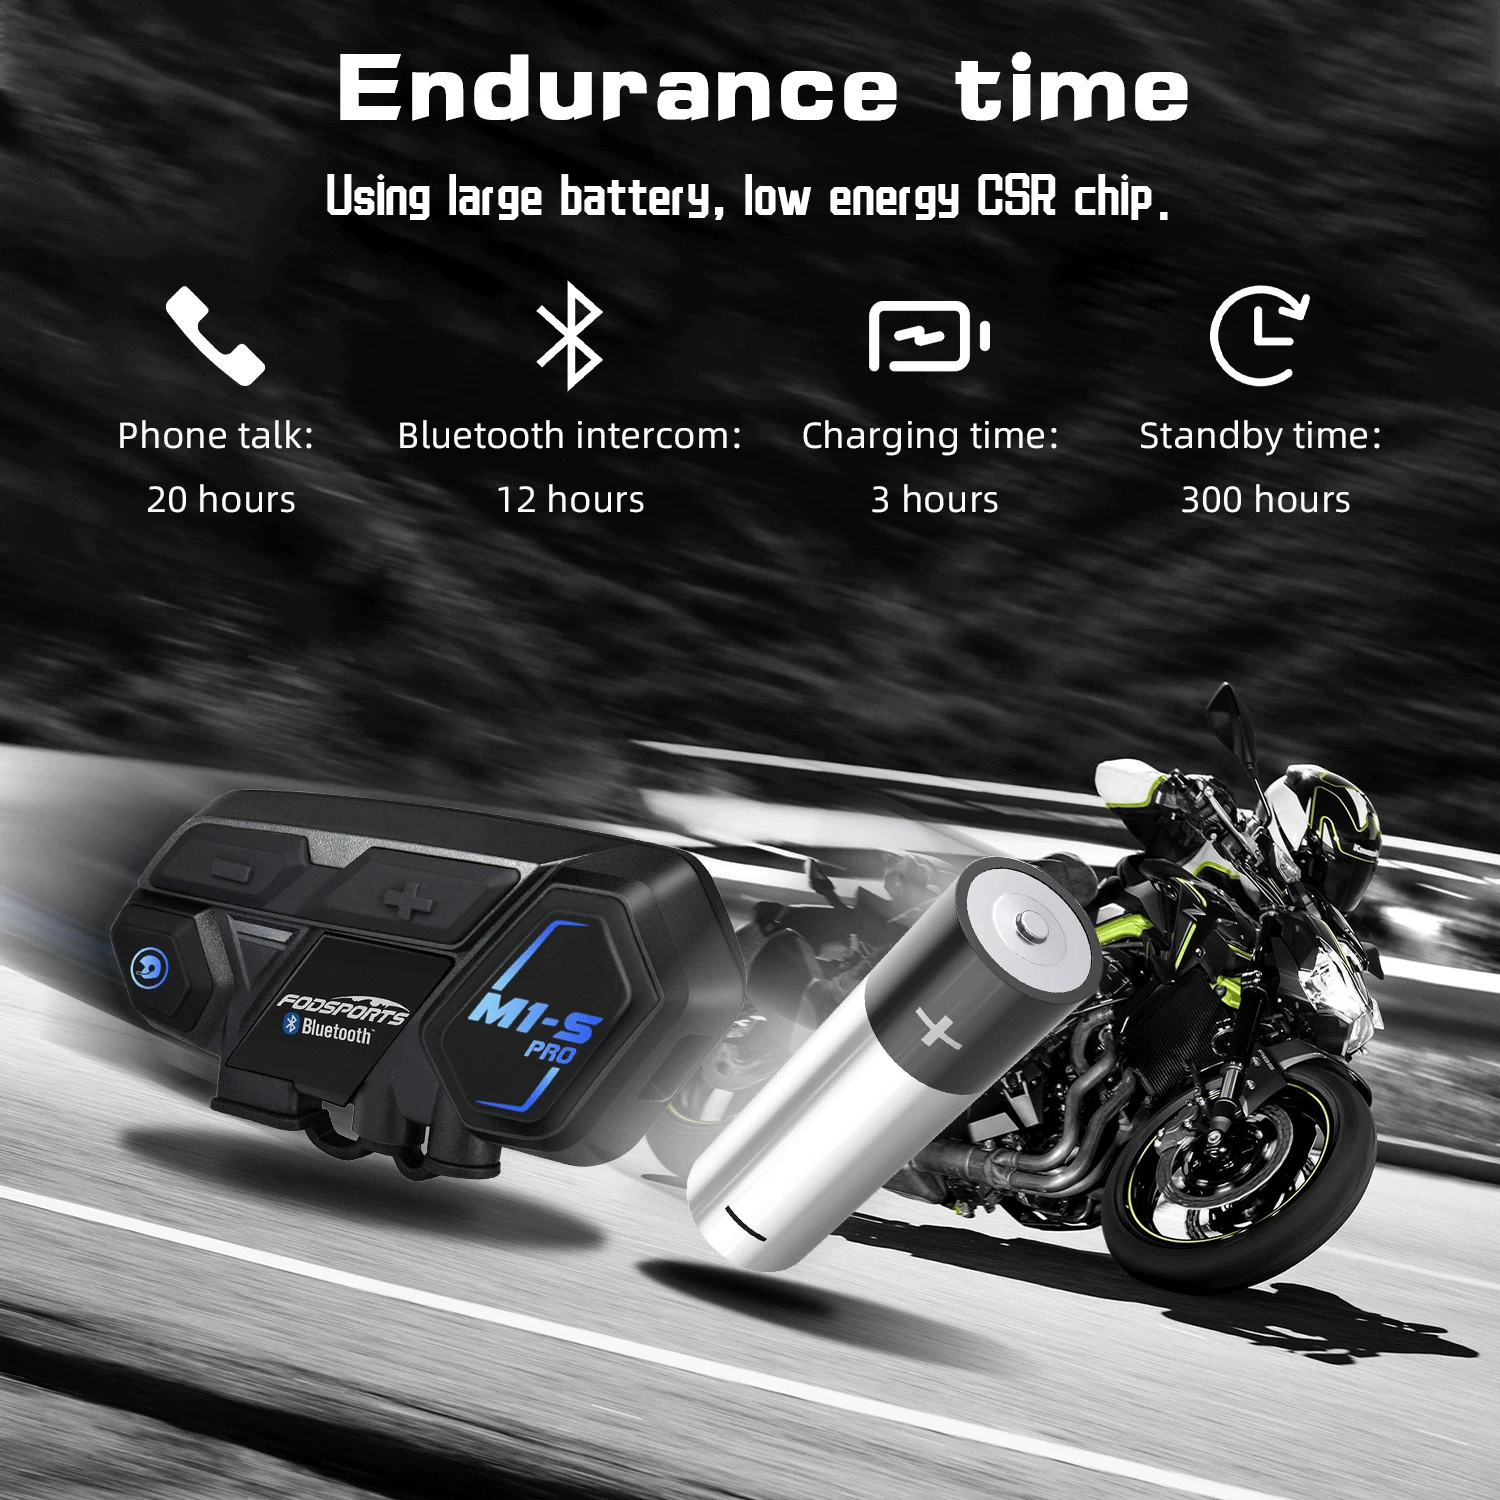 Fodsports M1-S Pro intercomunicador moto Helmet Bluetooth Headset Intercom Motorcycle for 8 Riders Waterproof Intercoms